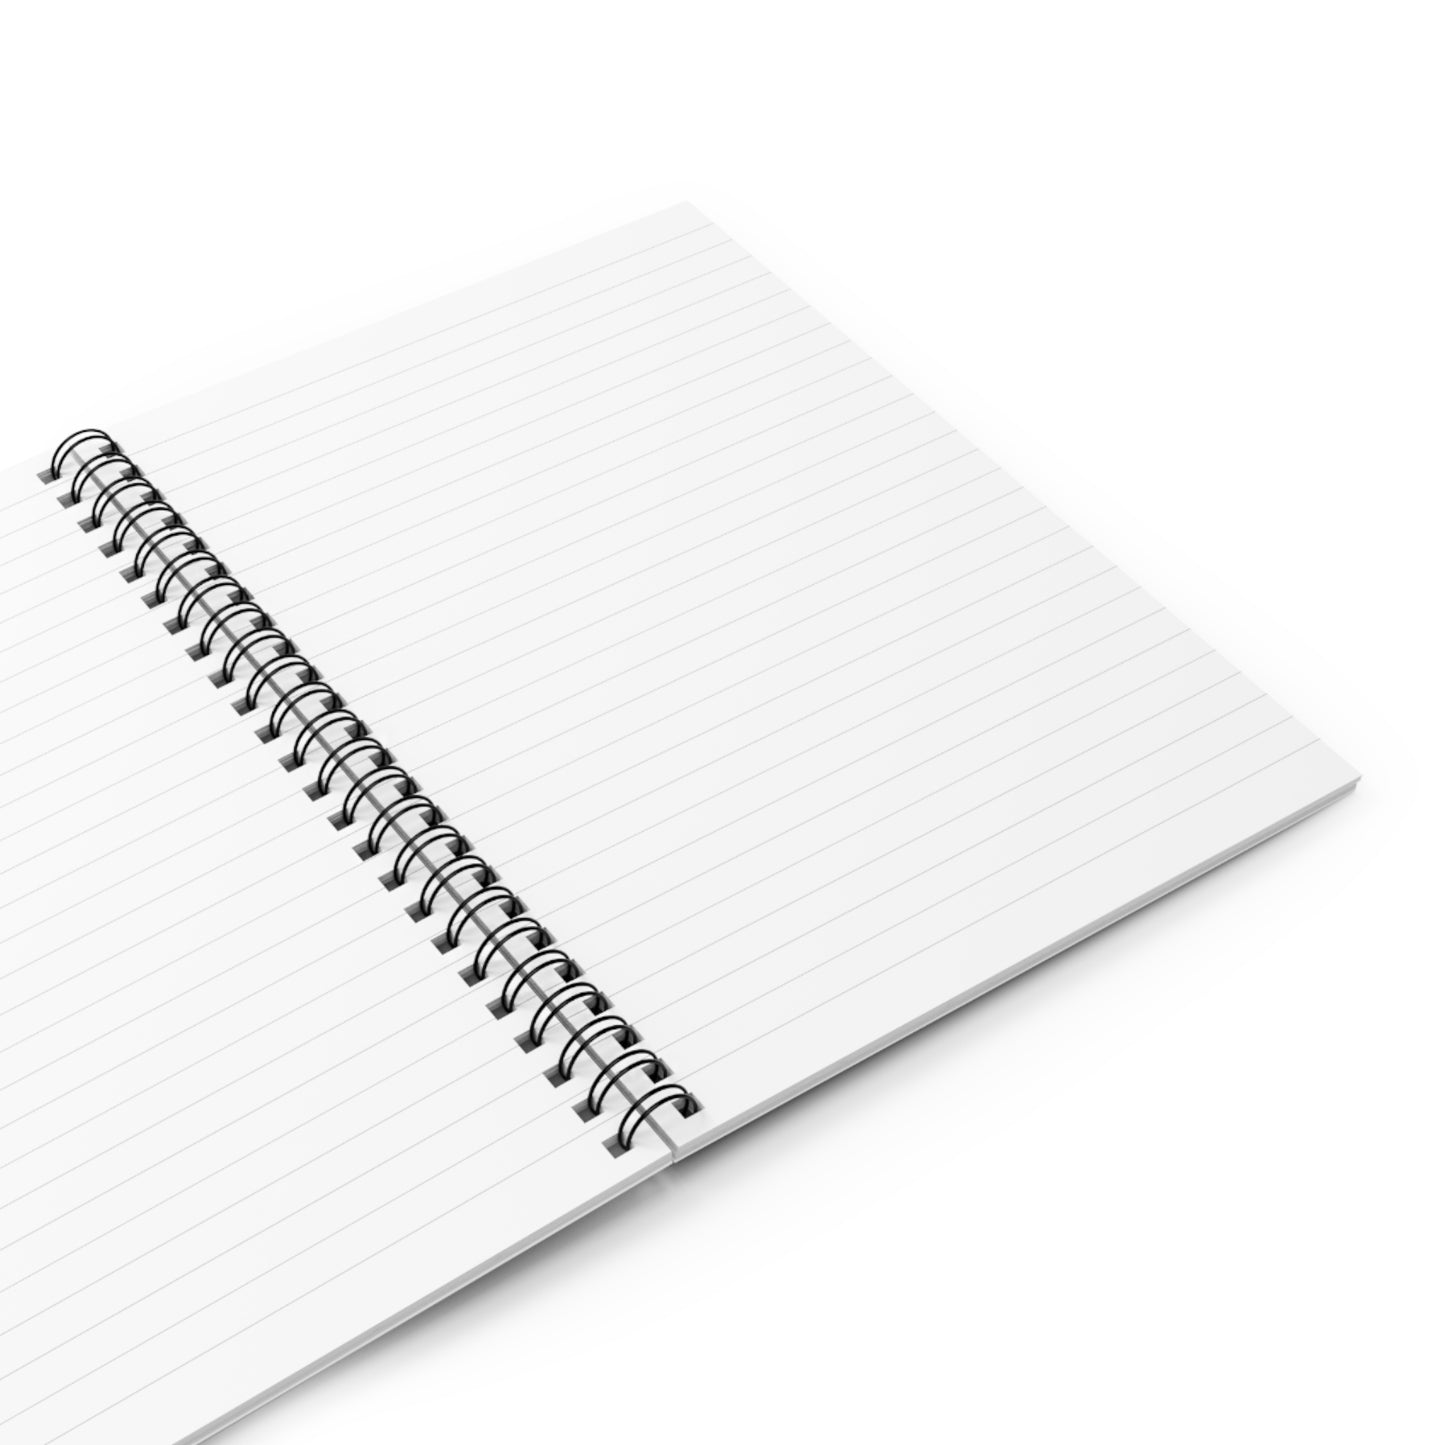 Self-aware Ratbag - Ruled Line Notebook